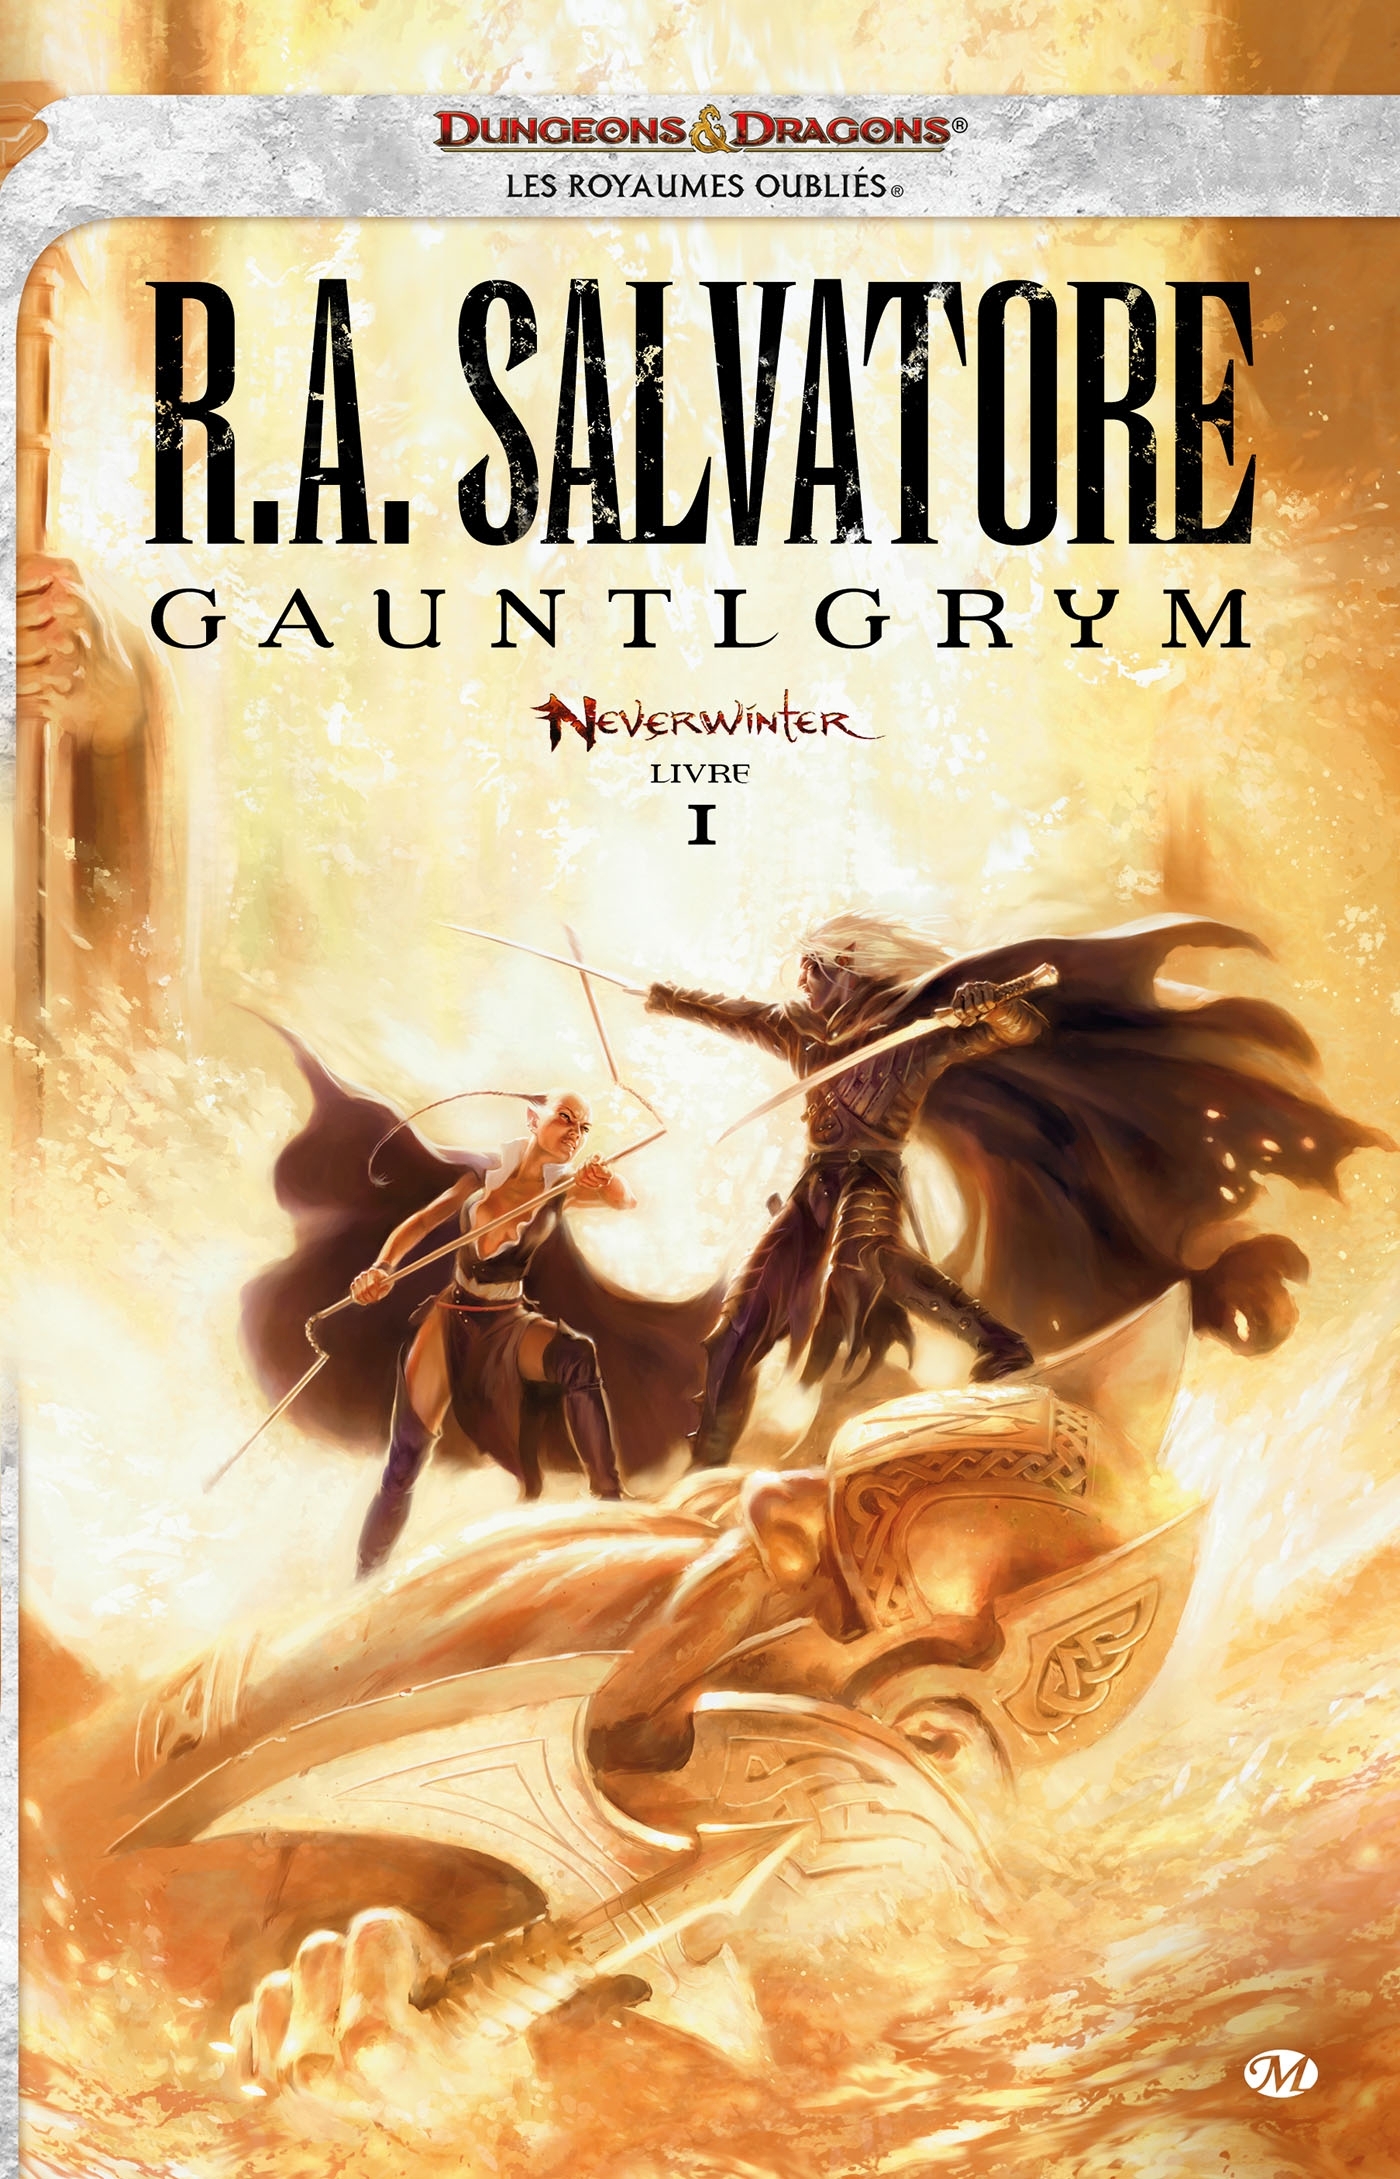 Neverwinter, T1 : Gauntlgrym (9782811206901-front-cover)